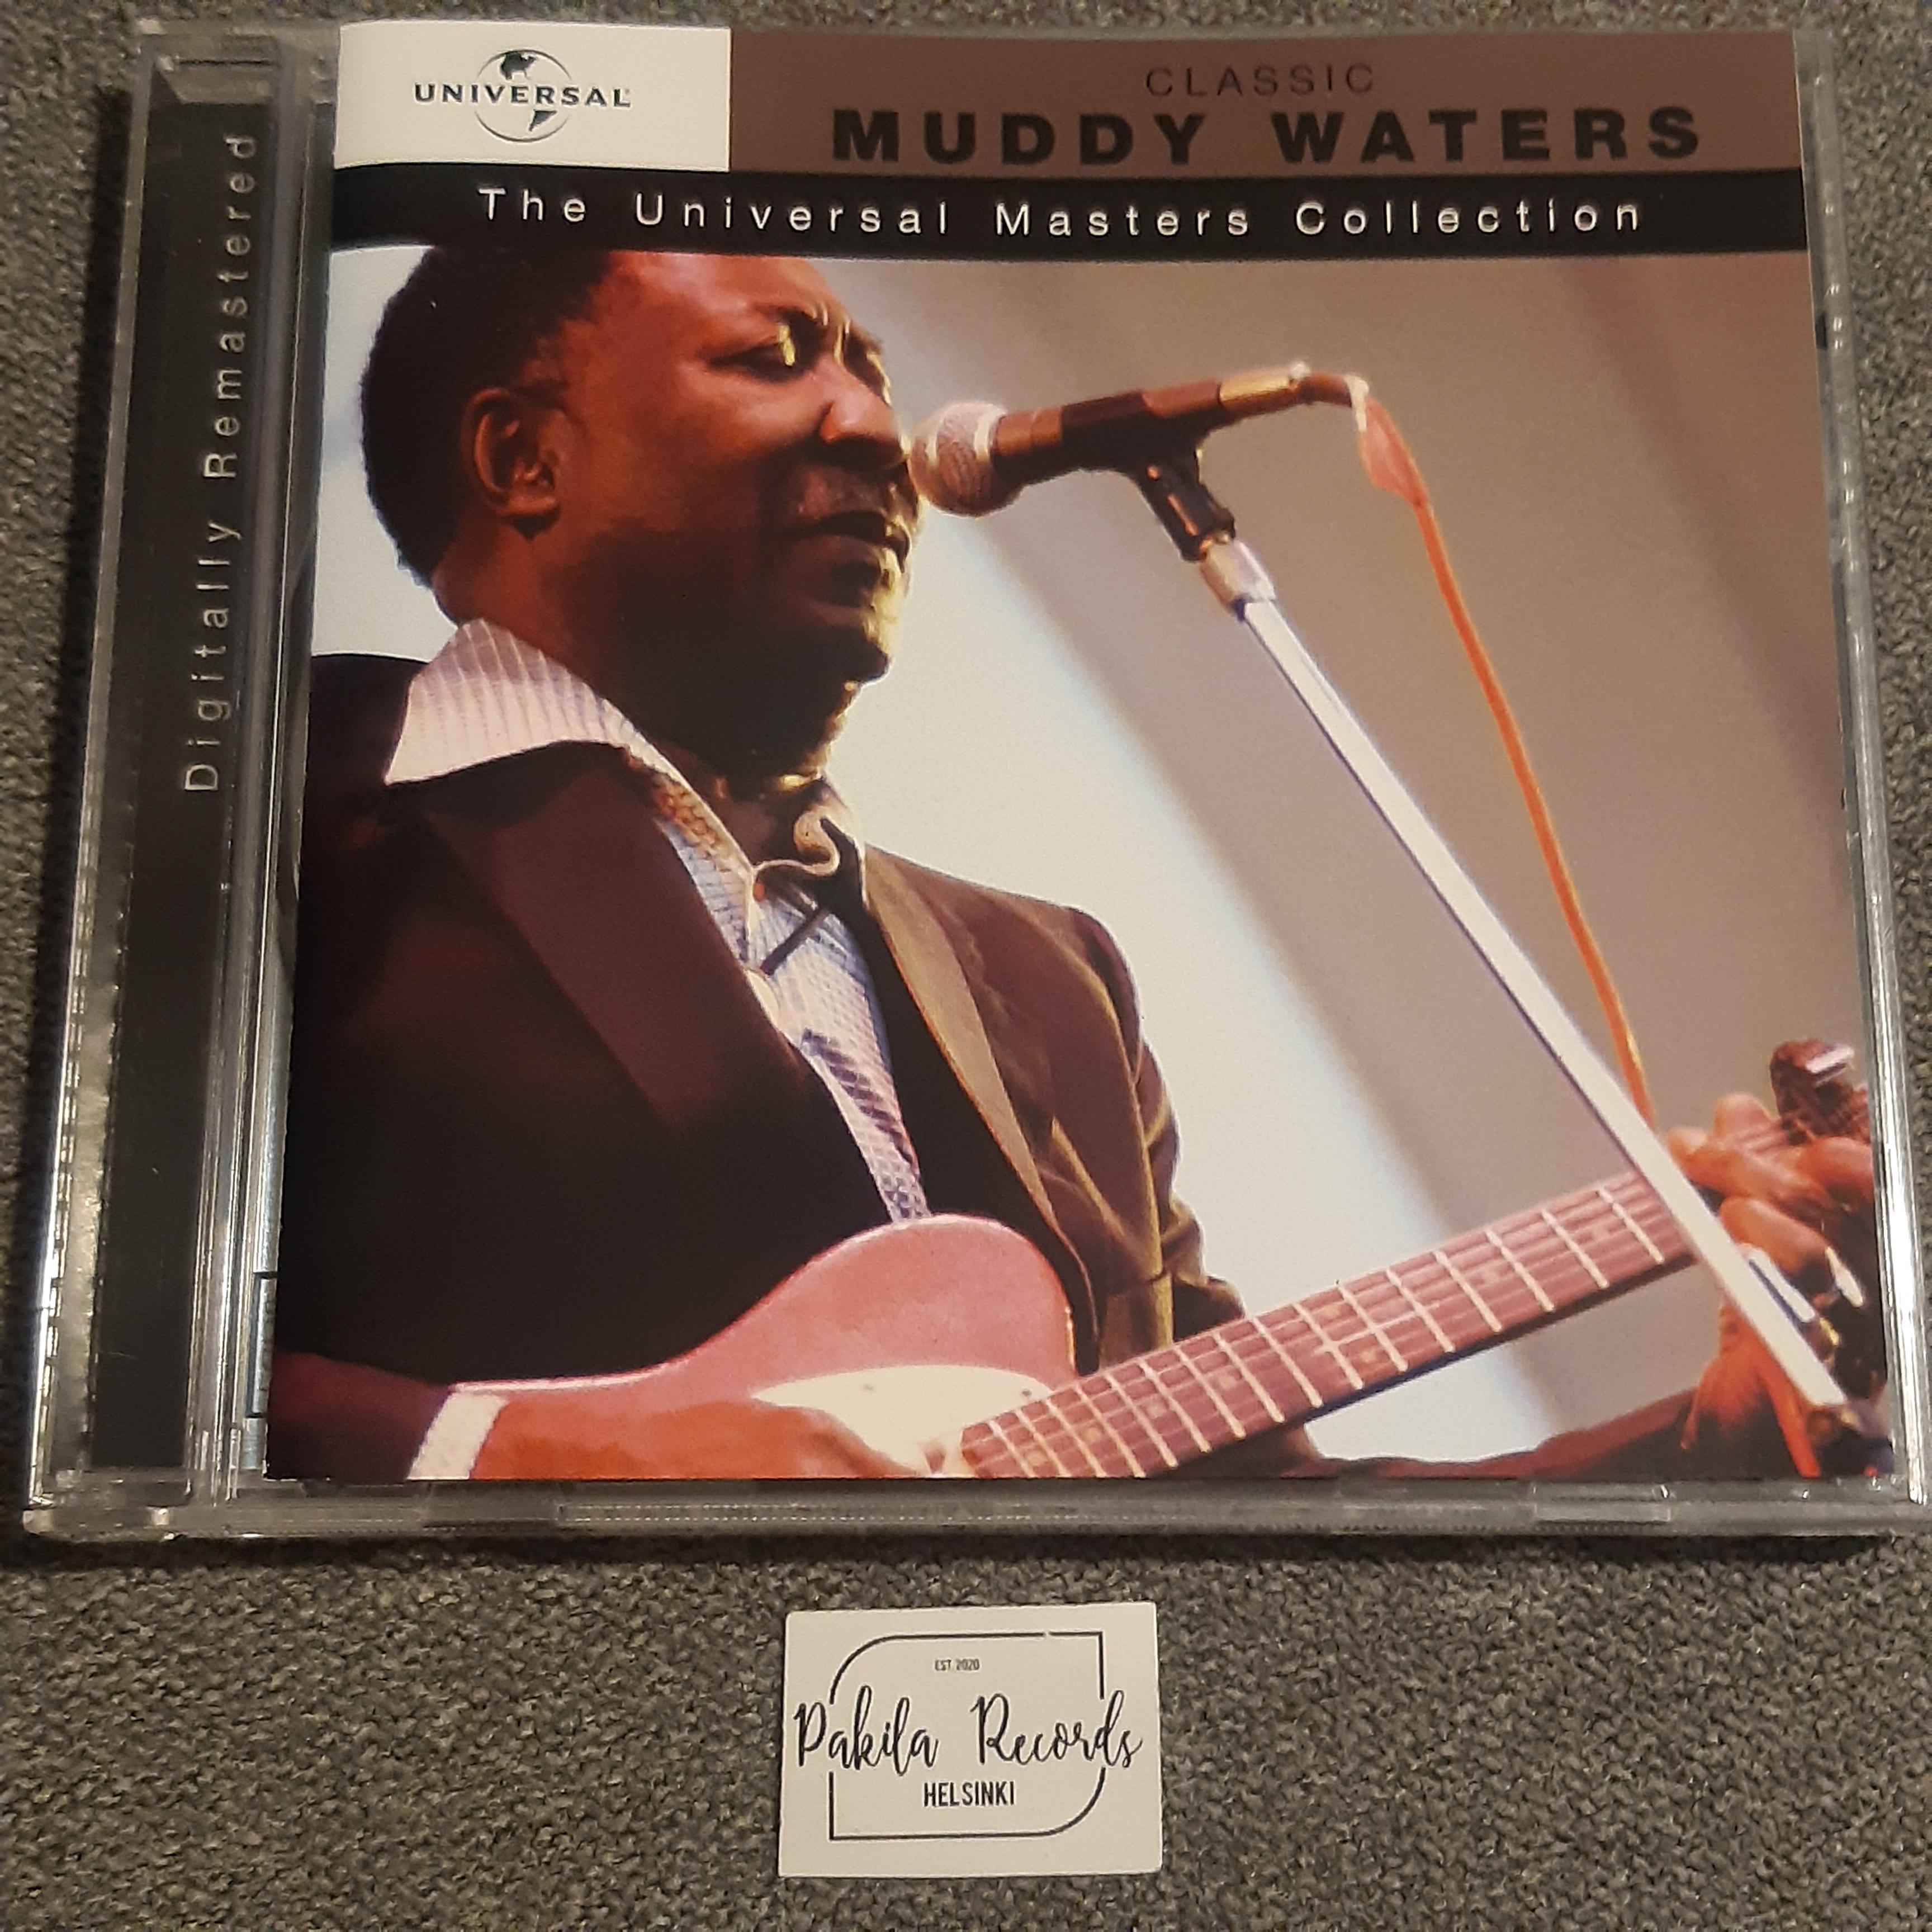 Muddy Waters - Classic - CD (käytetty)